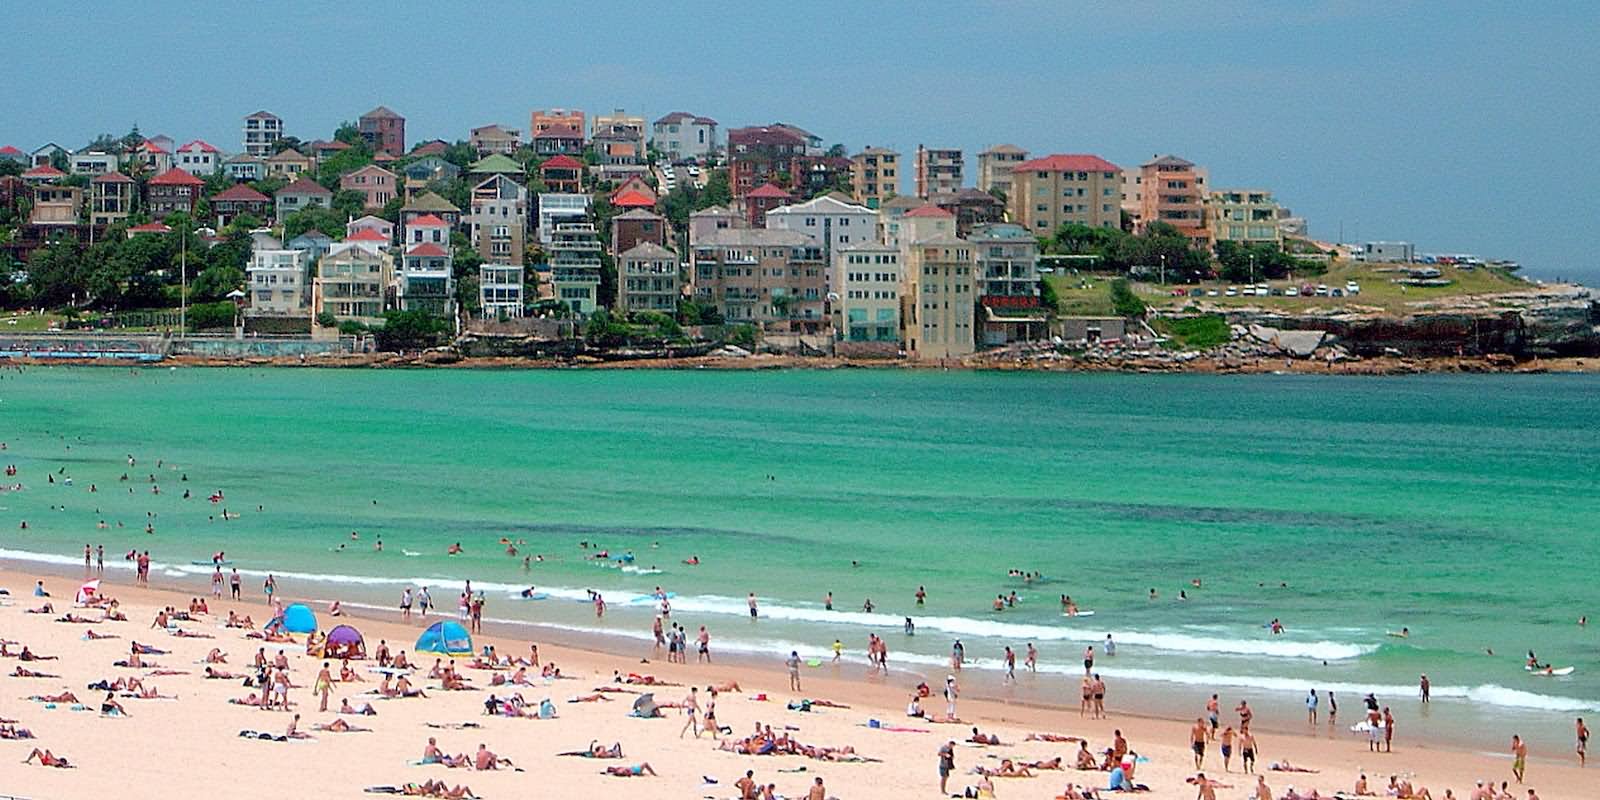 30 Very Beautiful Bondi Beach, Sydney Pictures And Photos